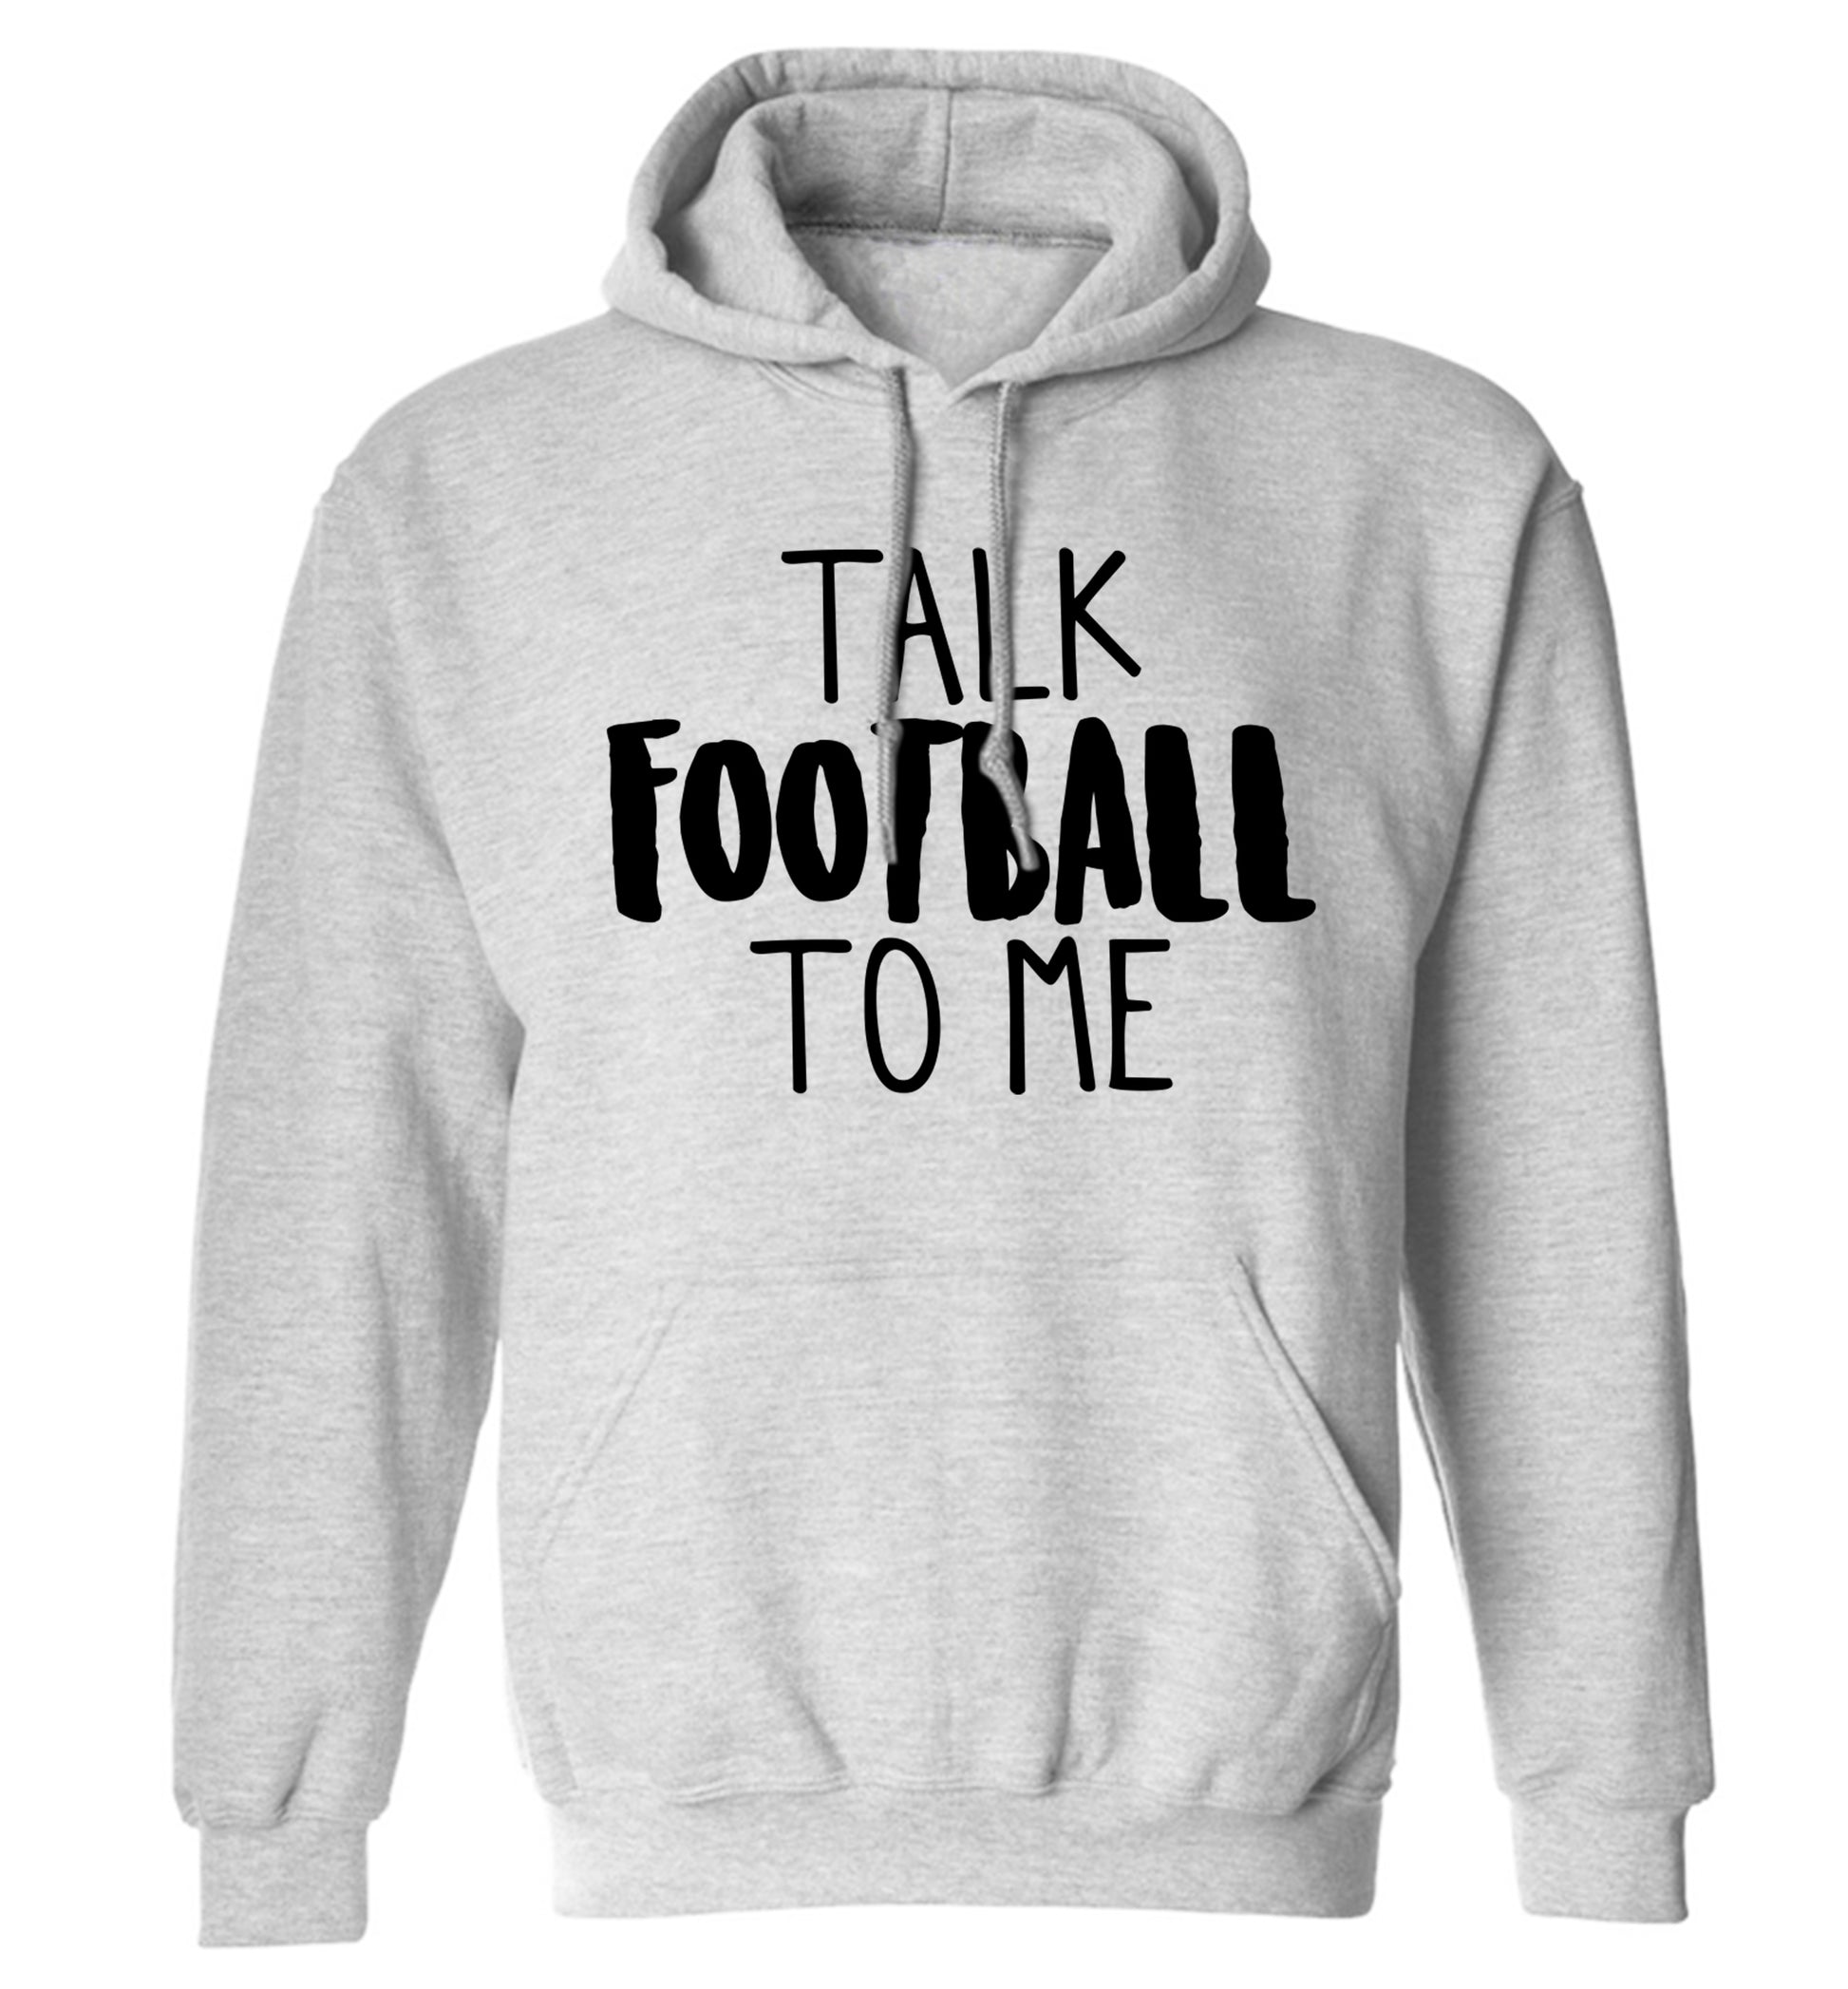 Talk football to me adults unisexgrey hoodie 2XL